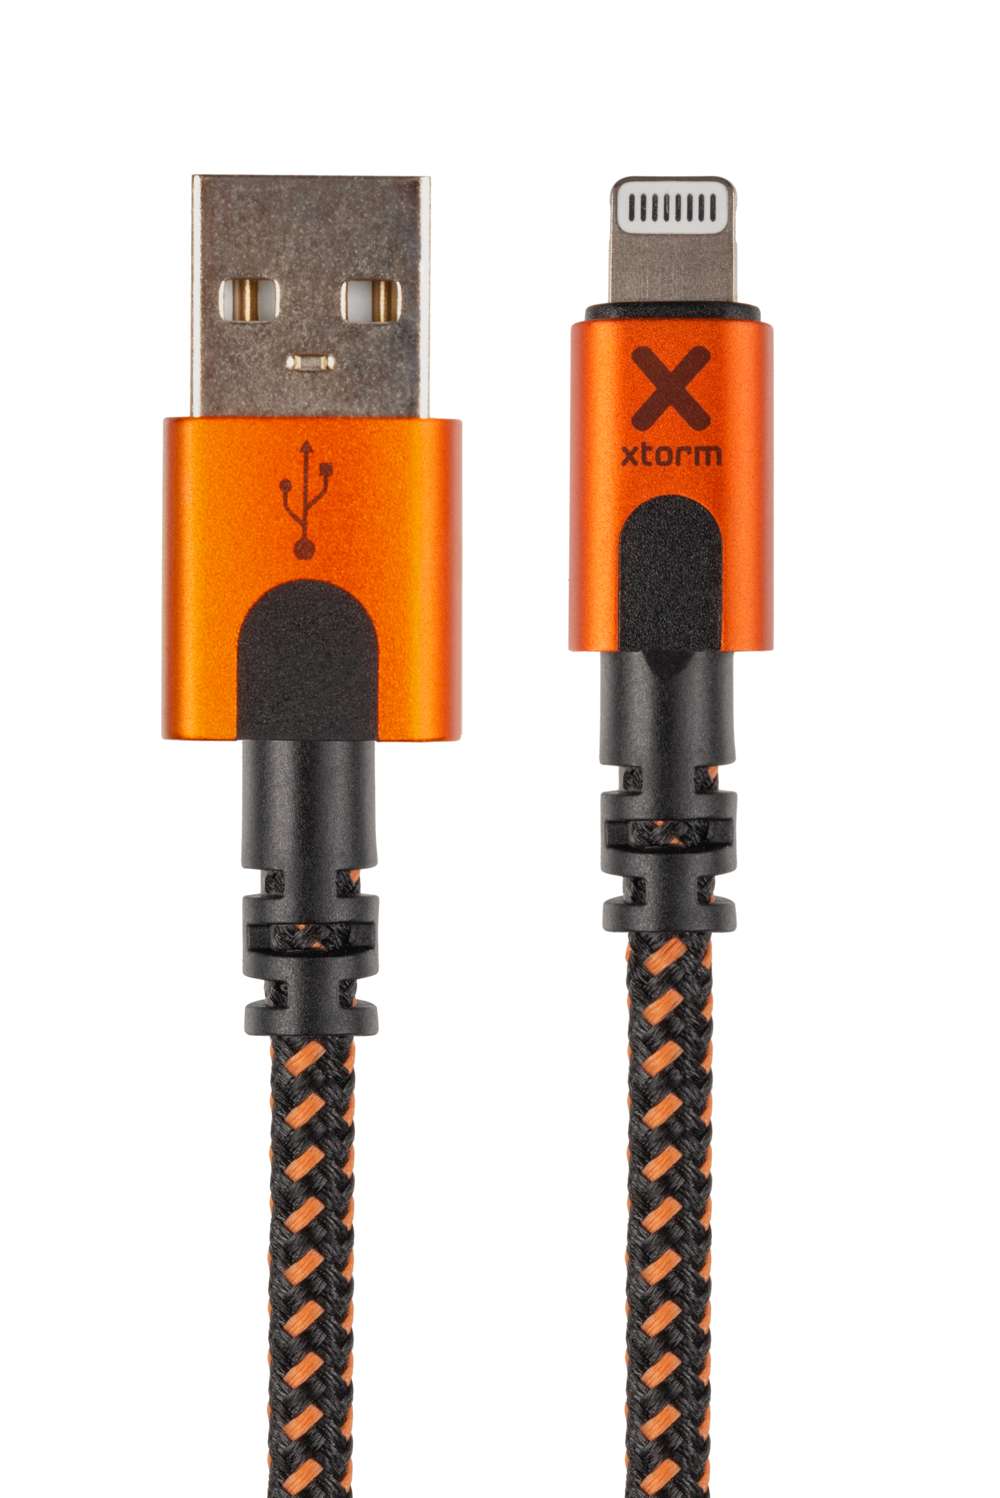 Xtreme USB to Lightning Cable - 1.5 meter - Xtorm EU